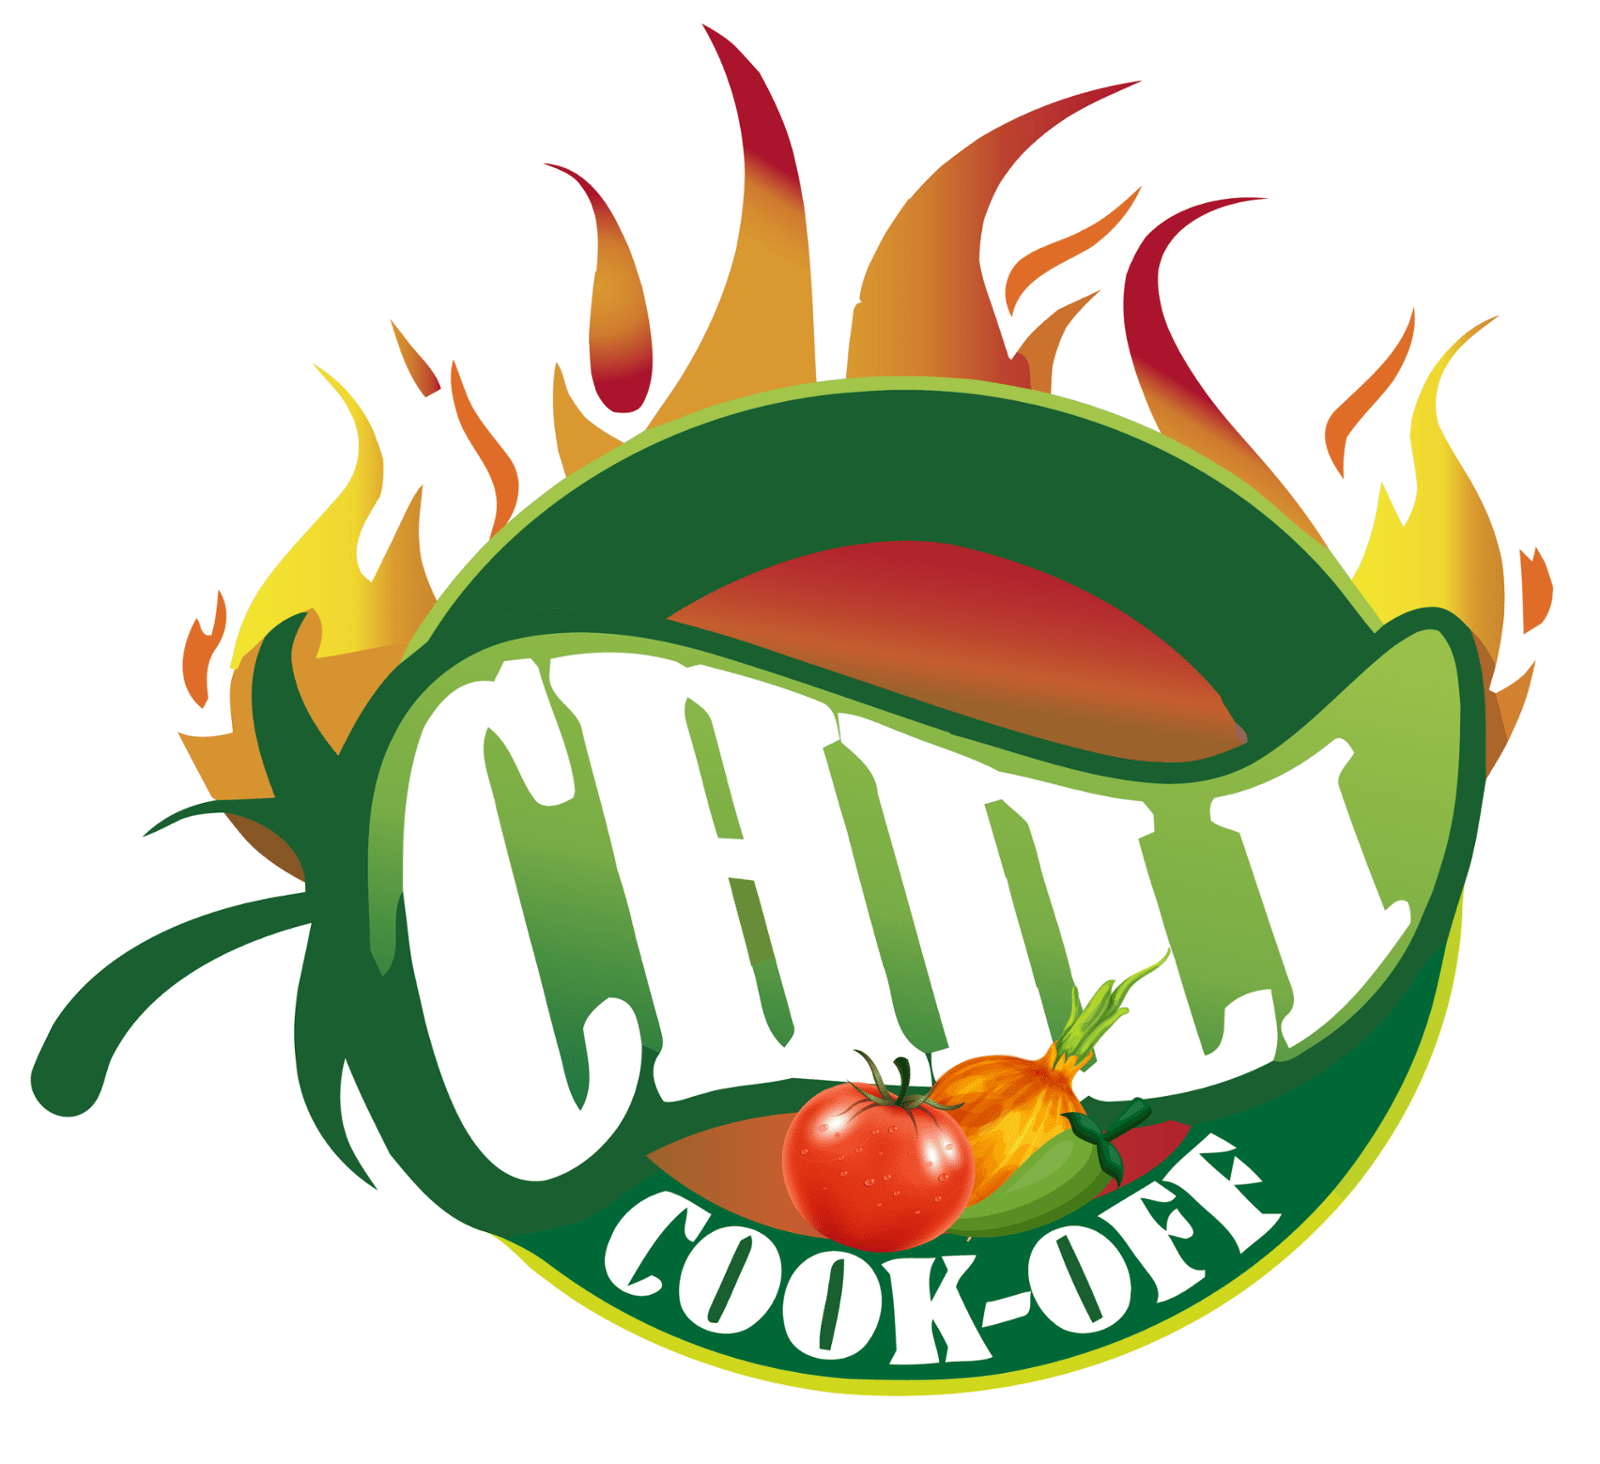 Suwanee Chili Cook Off & Music Festival